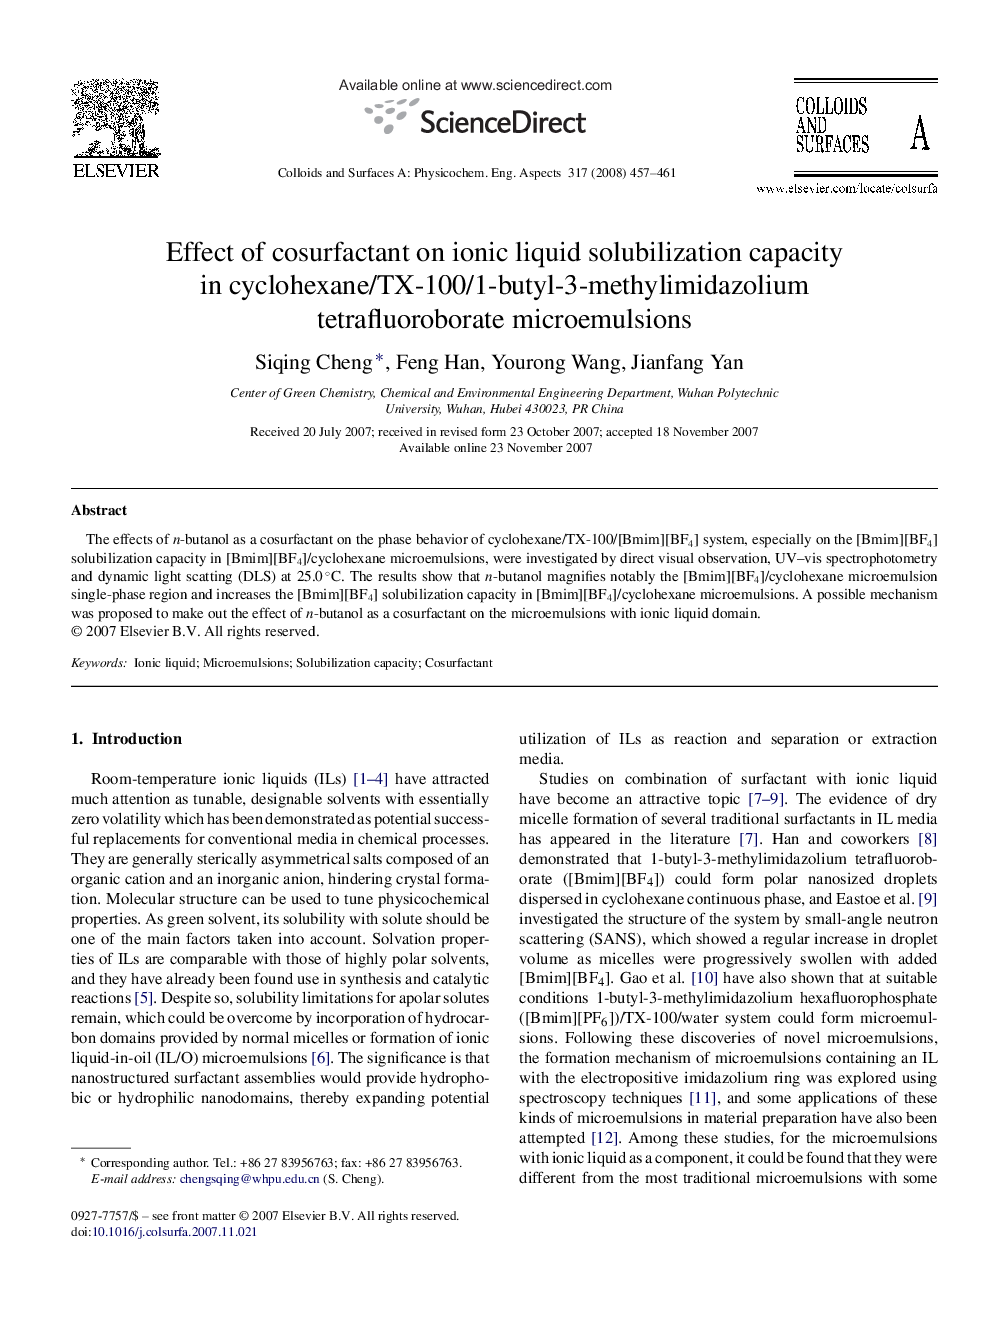 Effect of cosurfactant on ionic liquid solubilization capacity in cyclohexane/TX-100/1-butyl-3-methylimidazolium tetrafluoroborate microemulsions